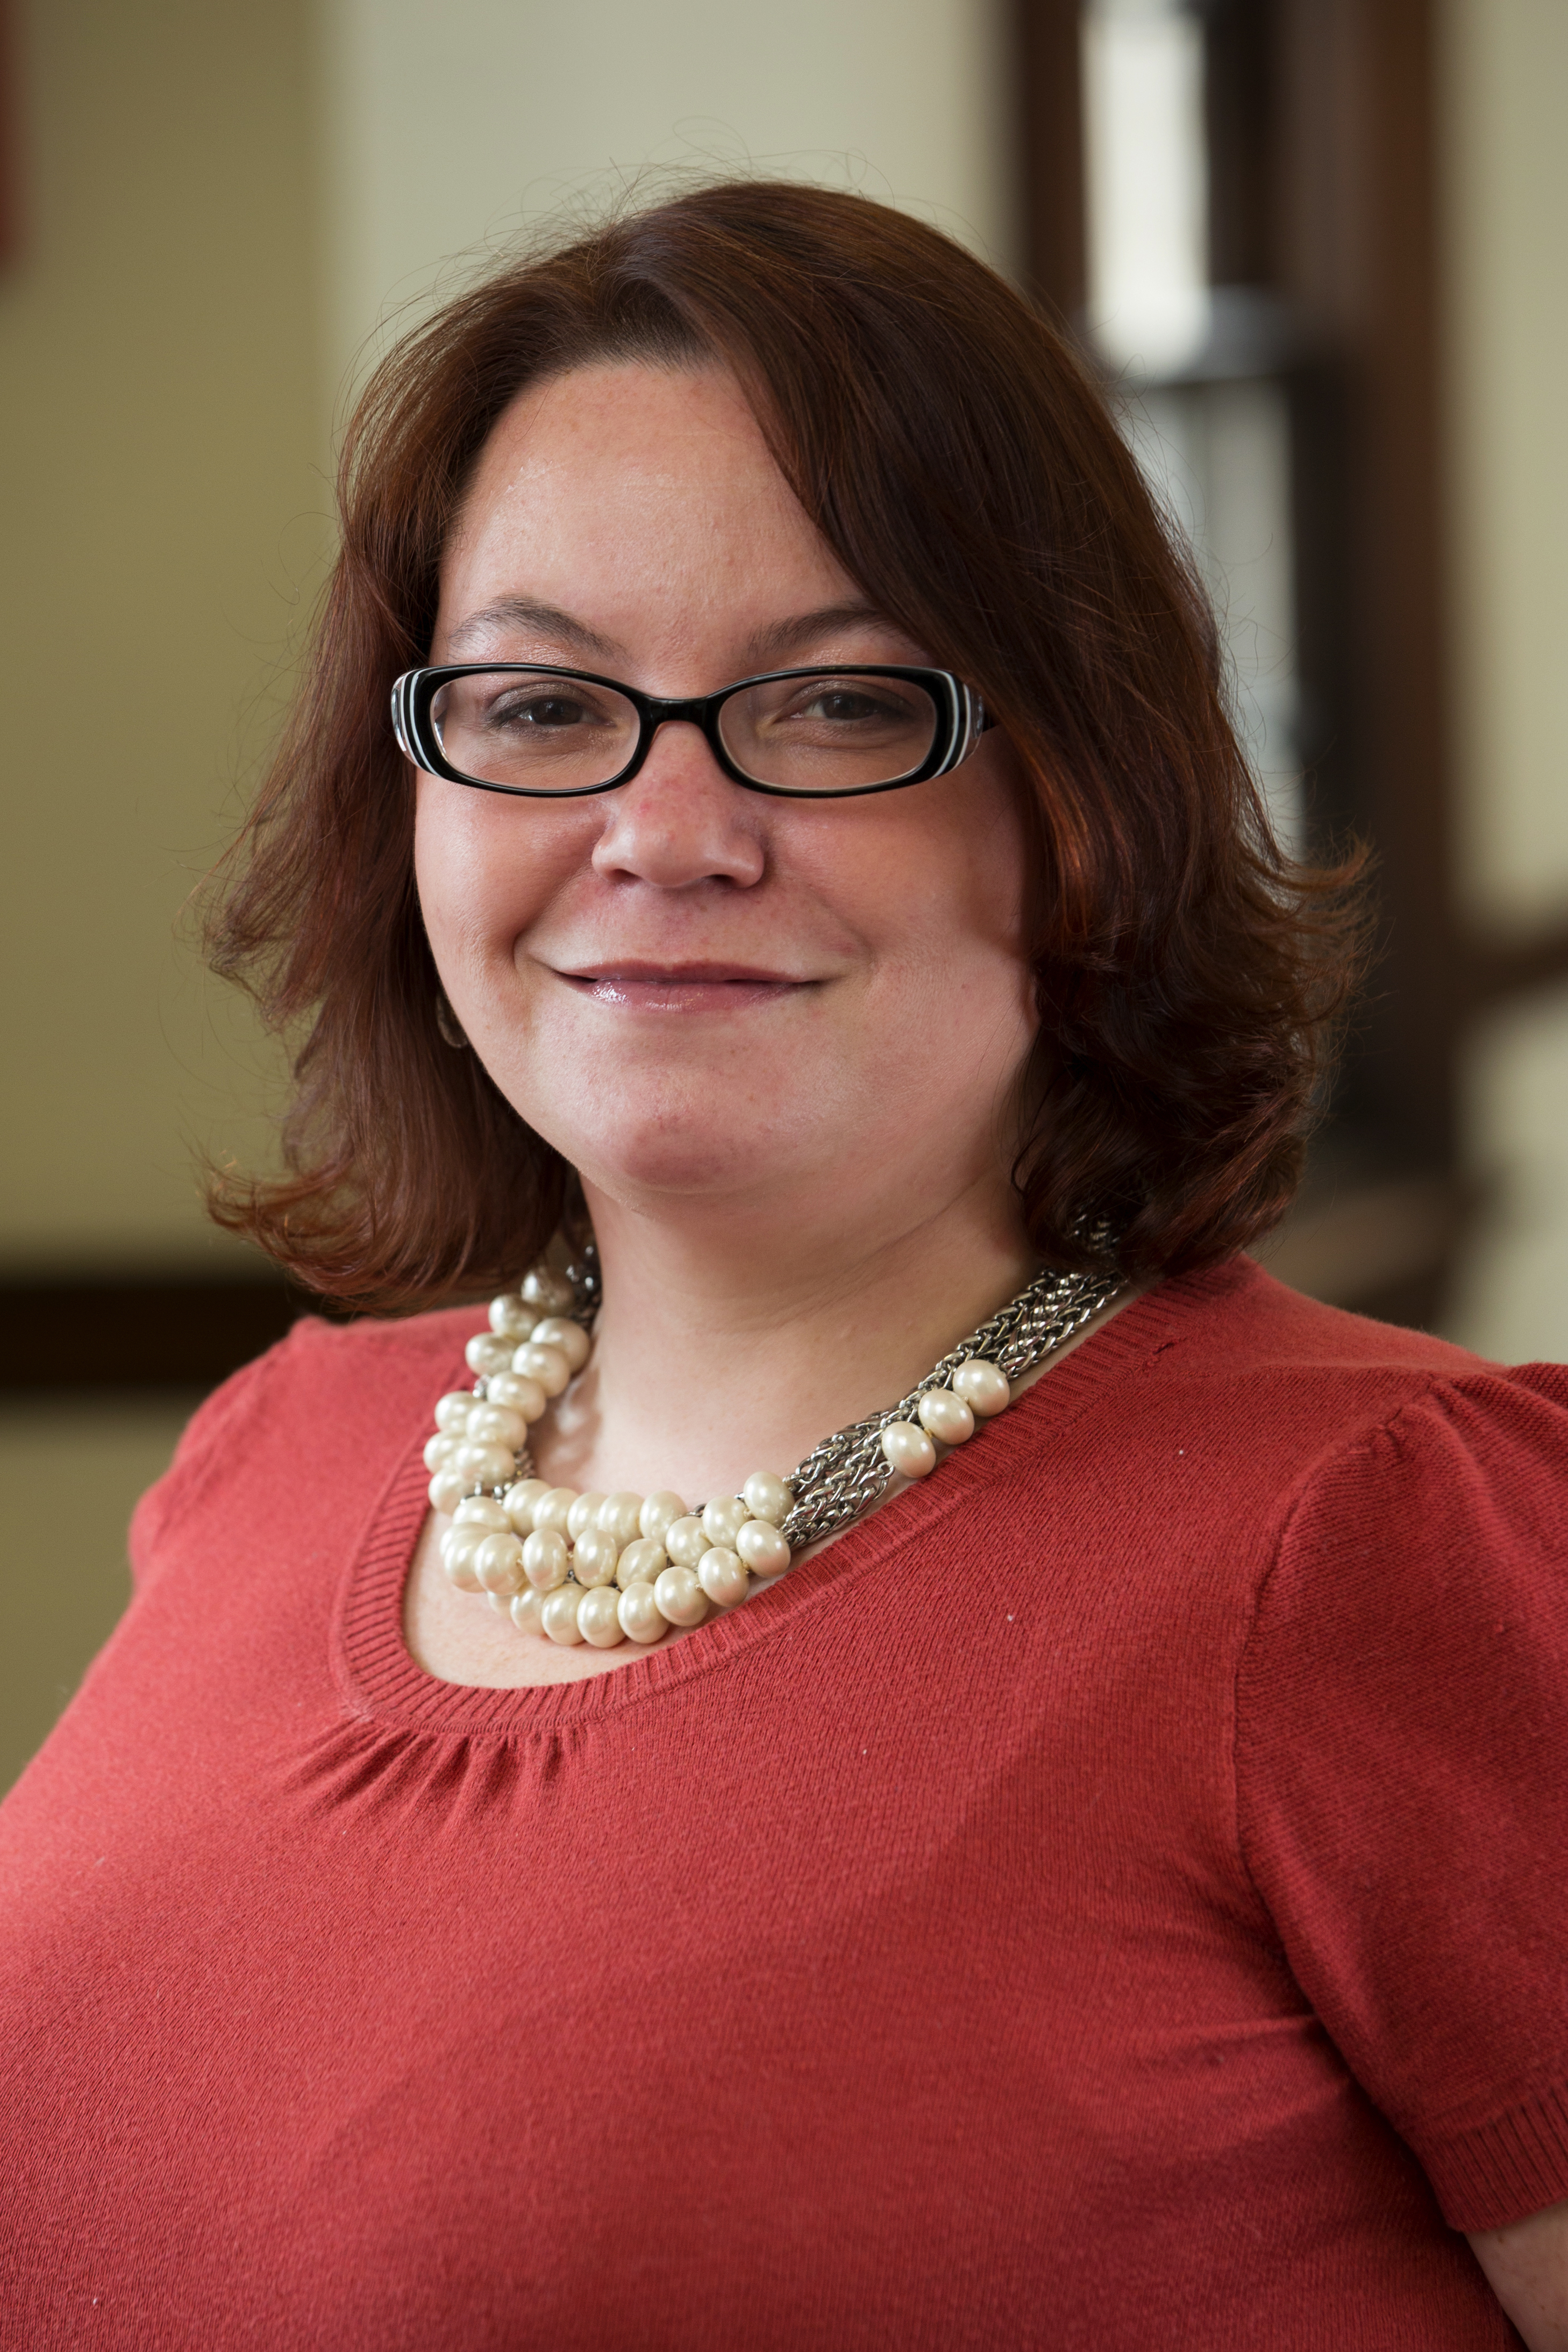 Adriana Bobinchock, senior director of public affairs and communications at McLean Hospital